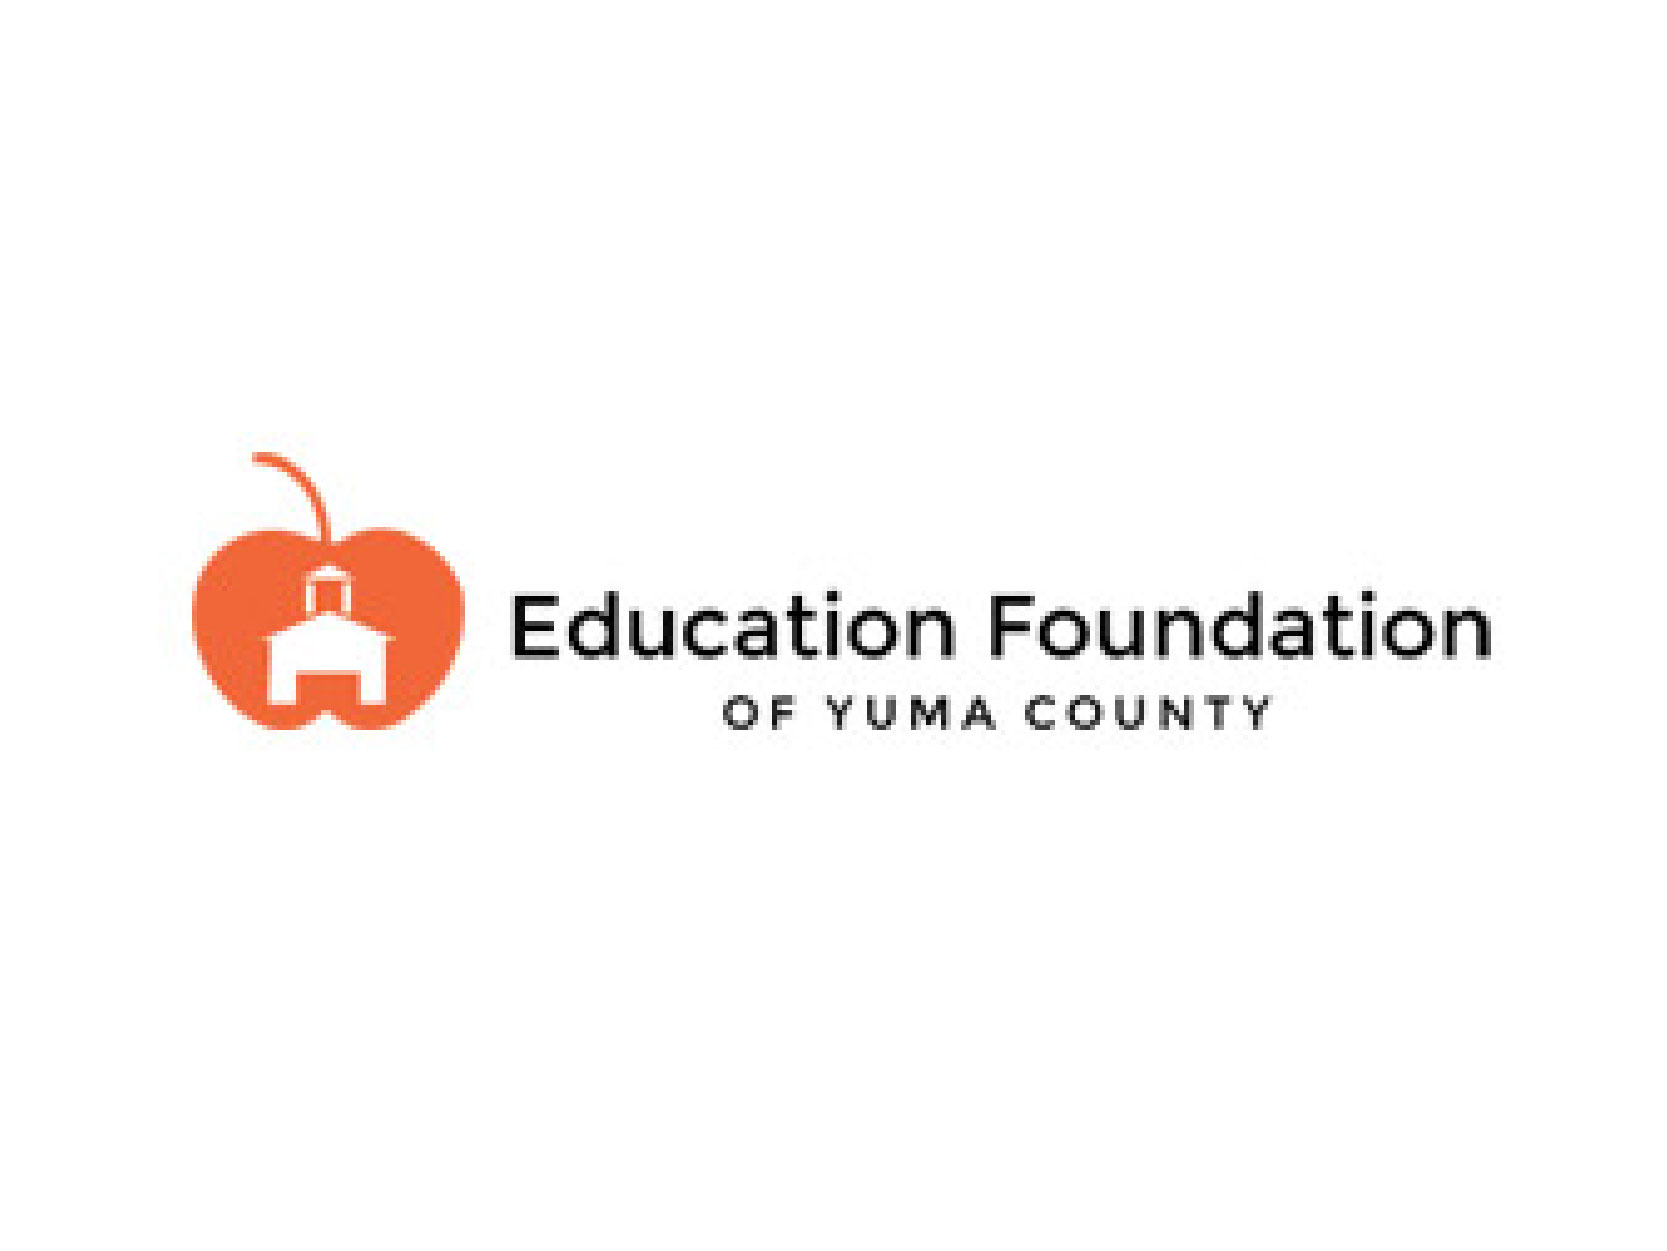 Education Foundation of Yuma County logo